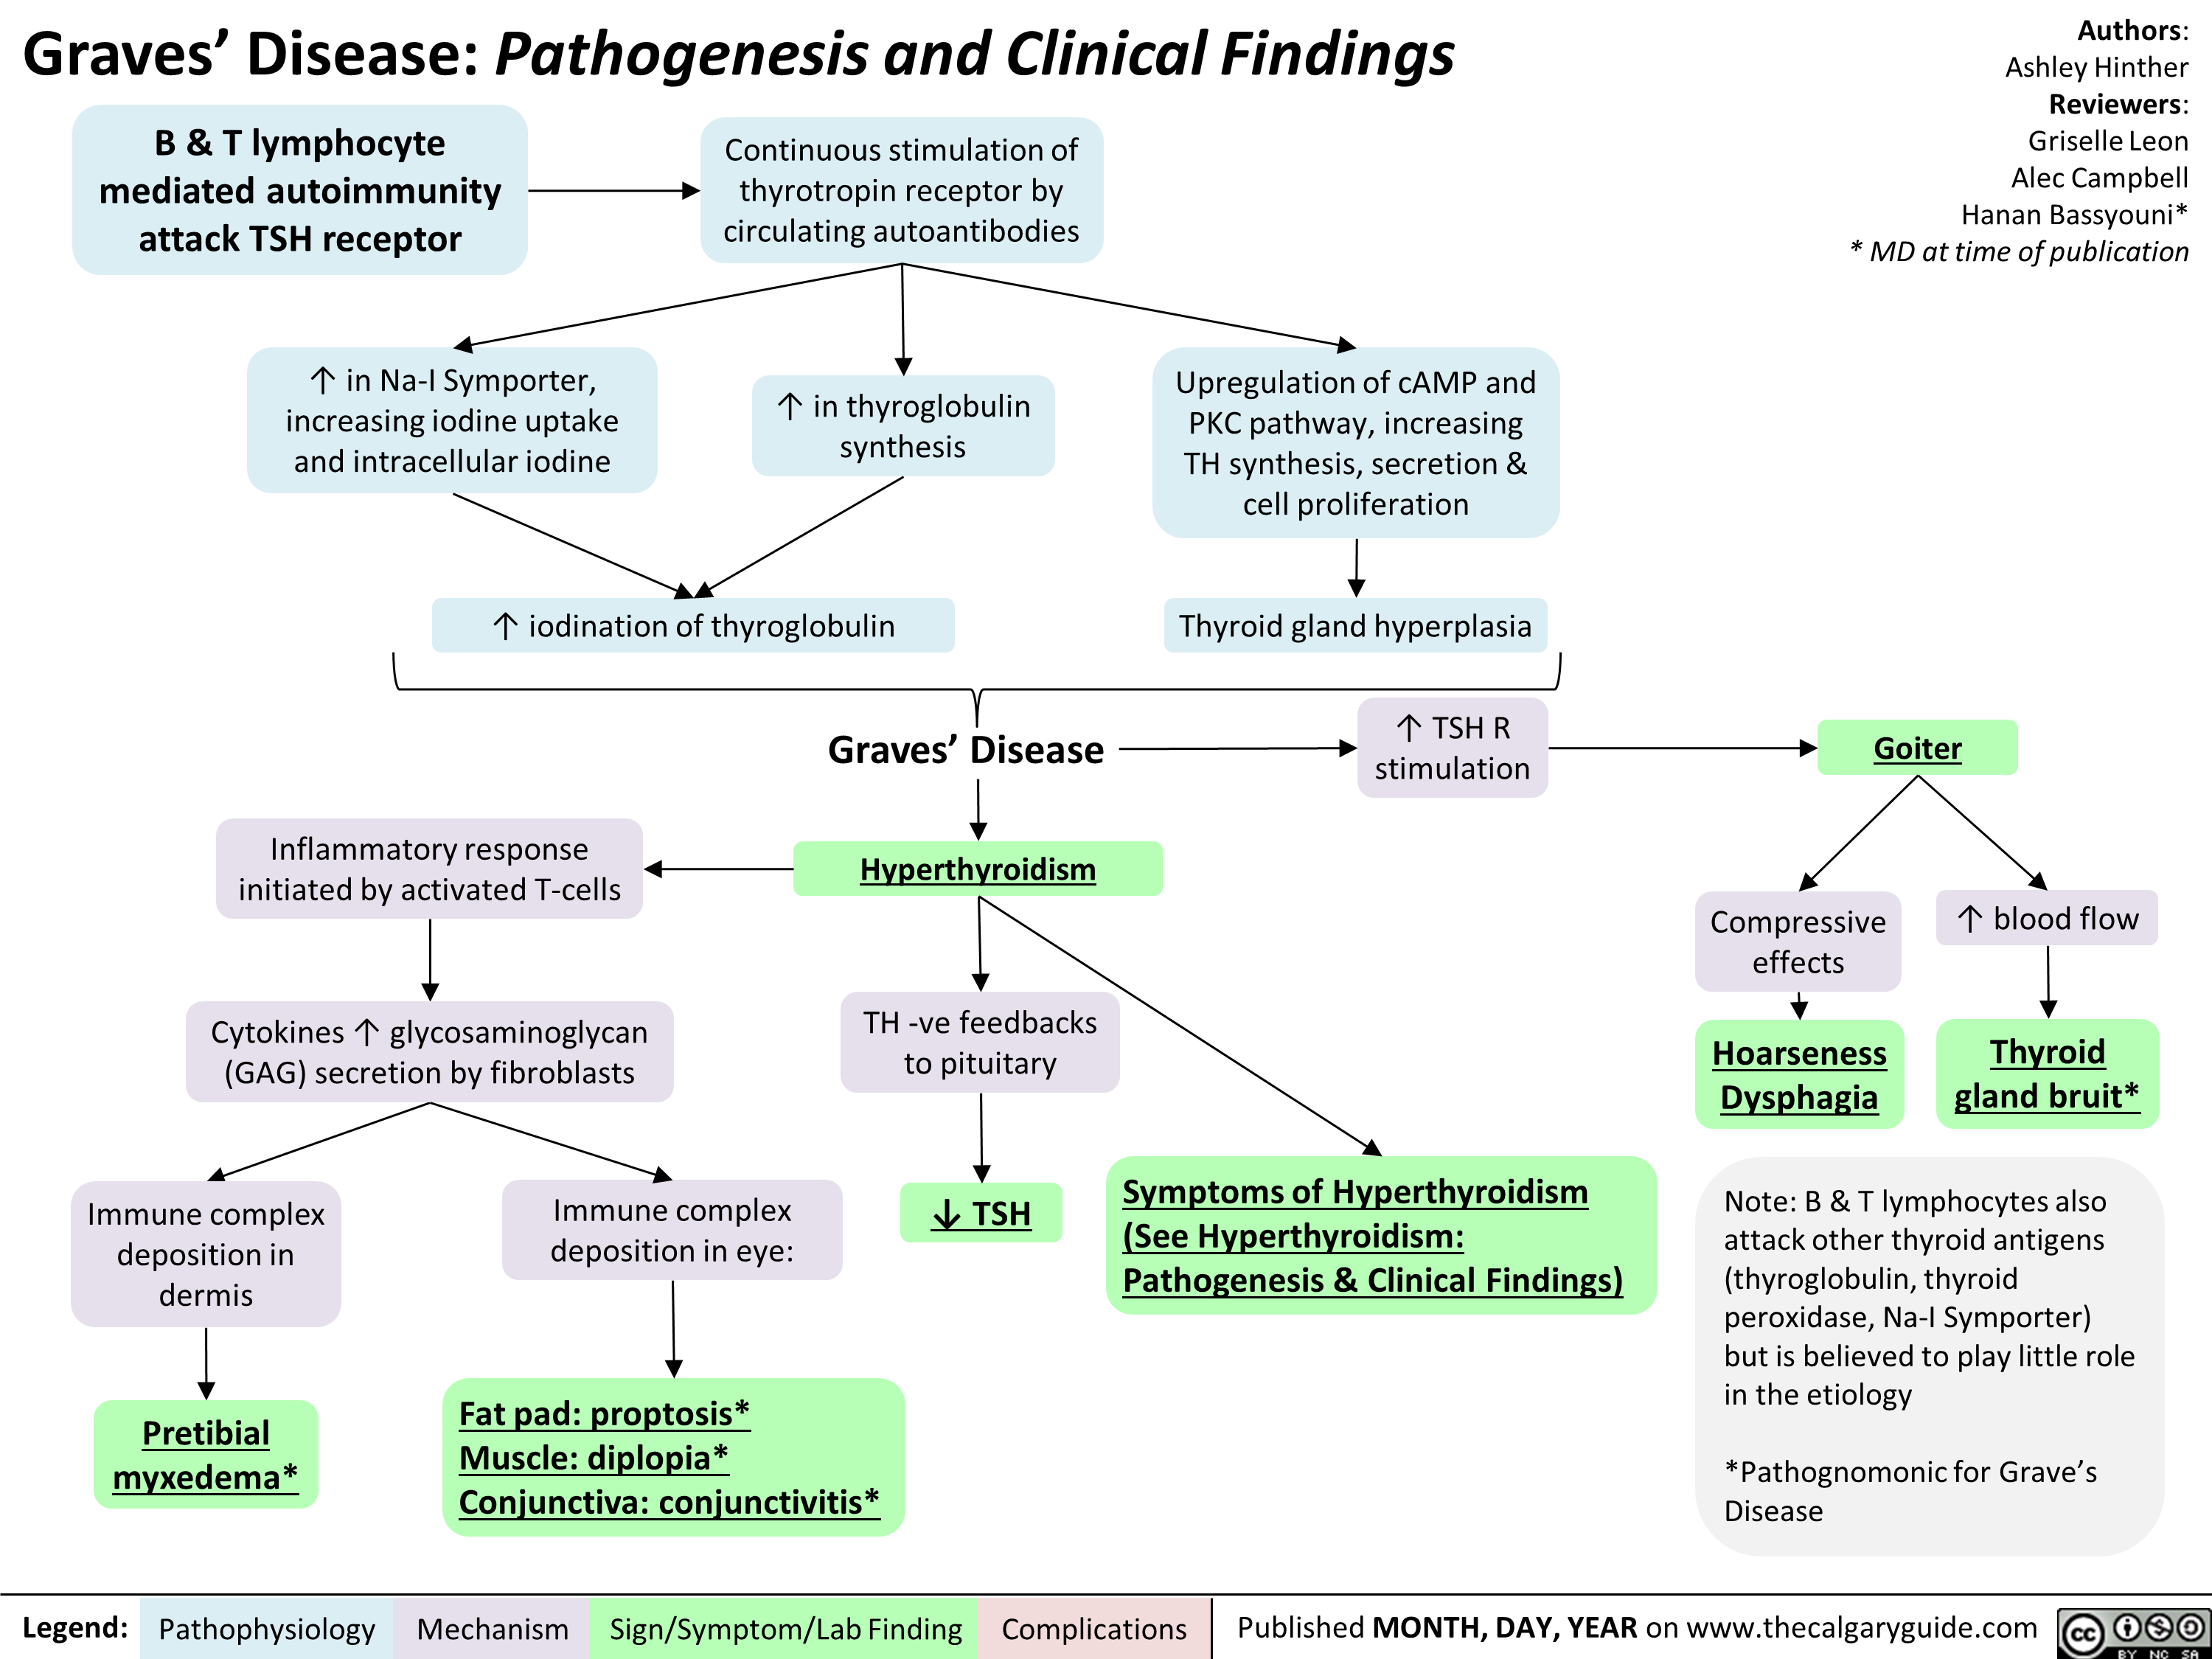 Graves' Disease Pathogenesis & Clinical Findings